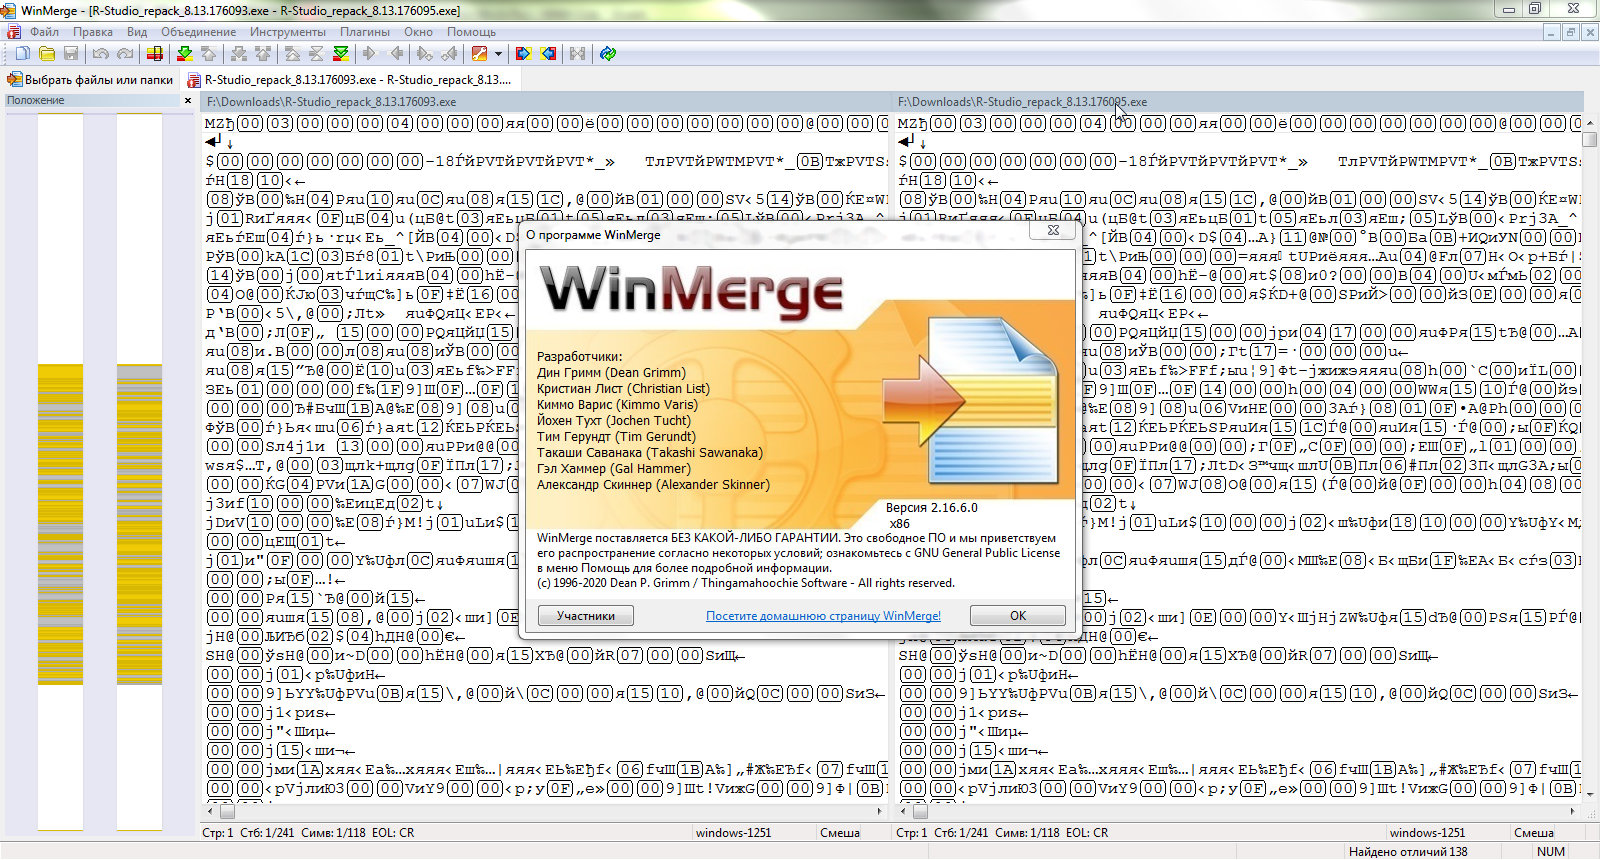 instaling WinMerge 2.16.33